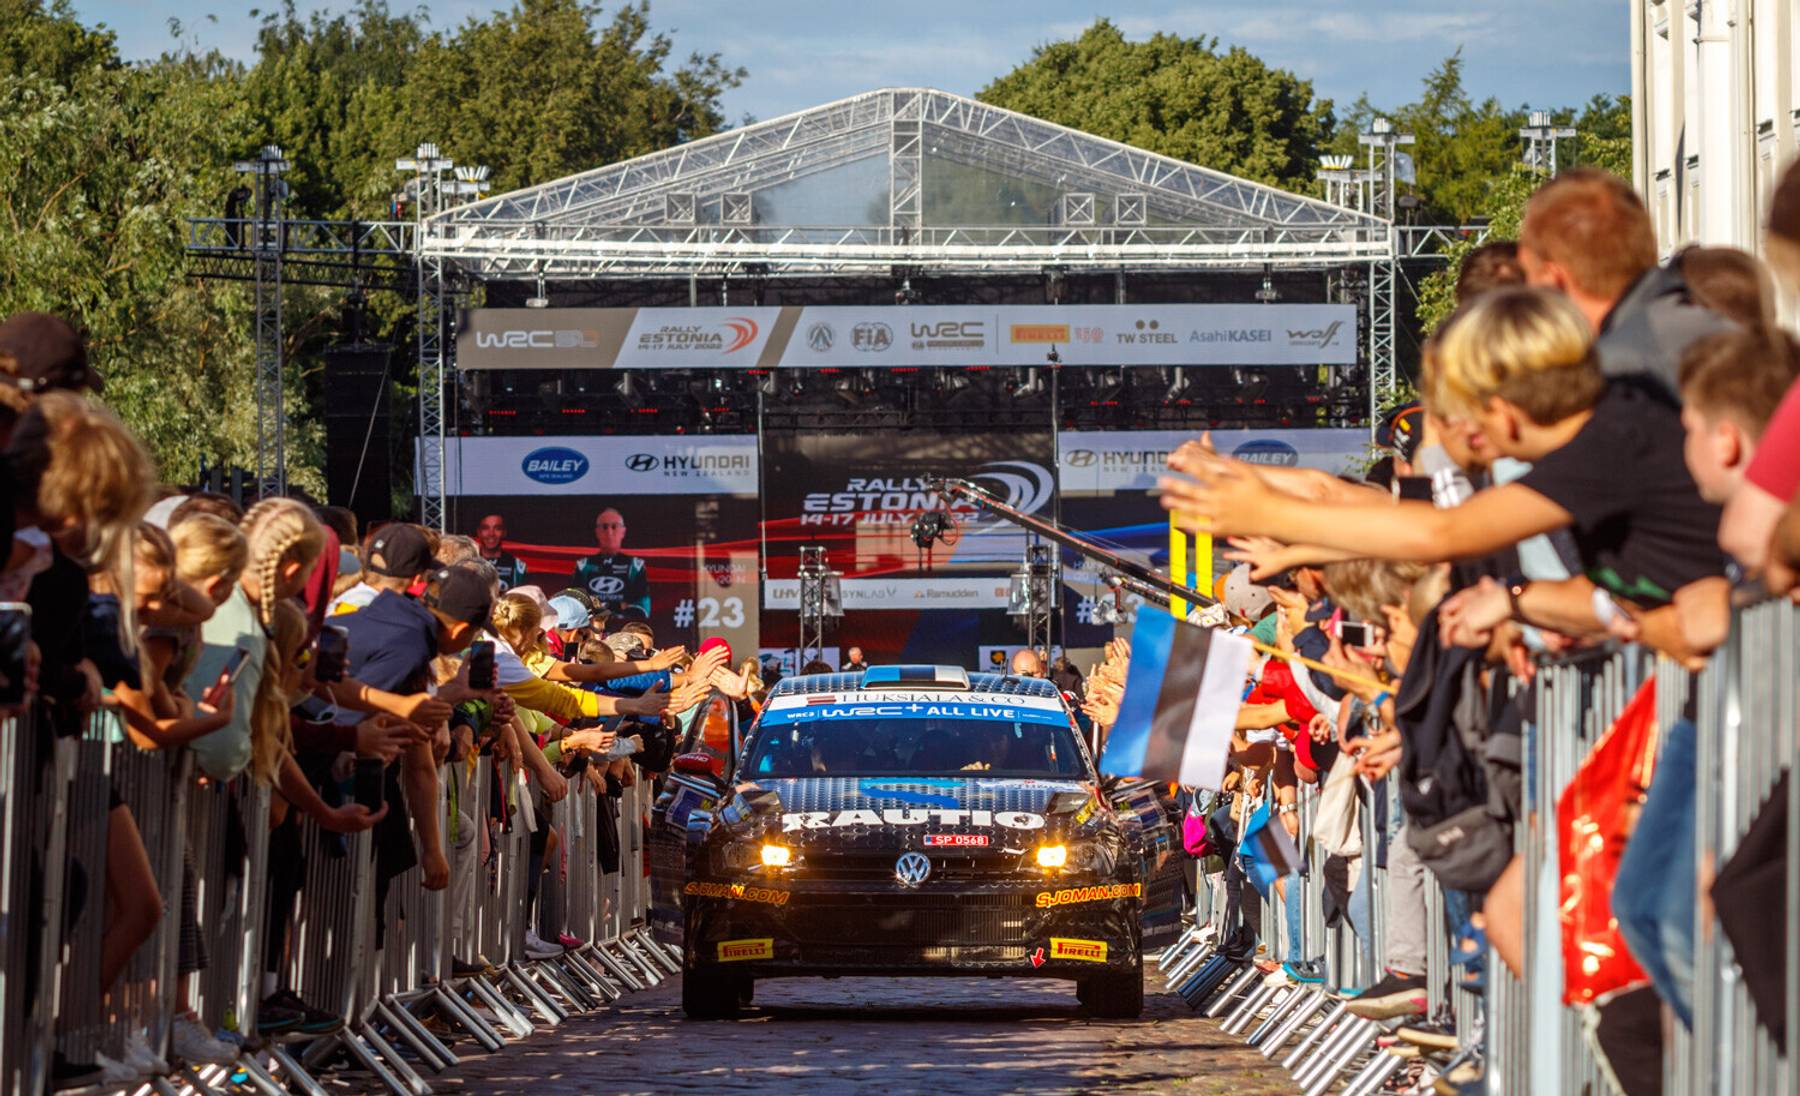 Mullused EMV etapi võitjad Egon Kaur / Silver Simm startimas Rally Estoniale.